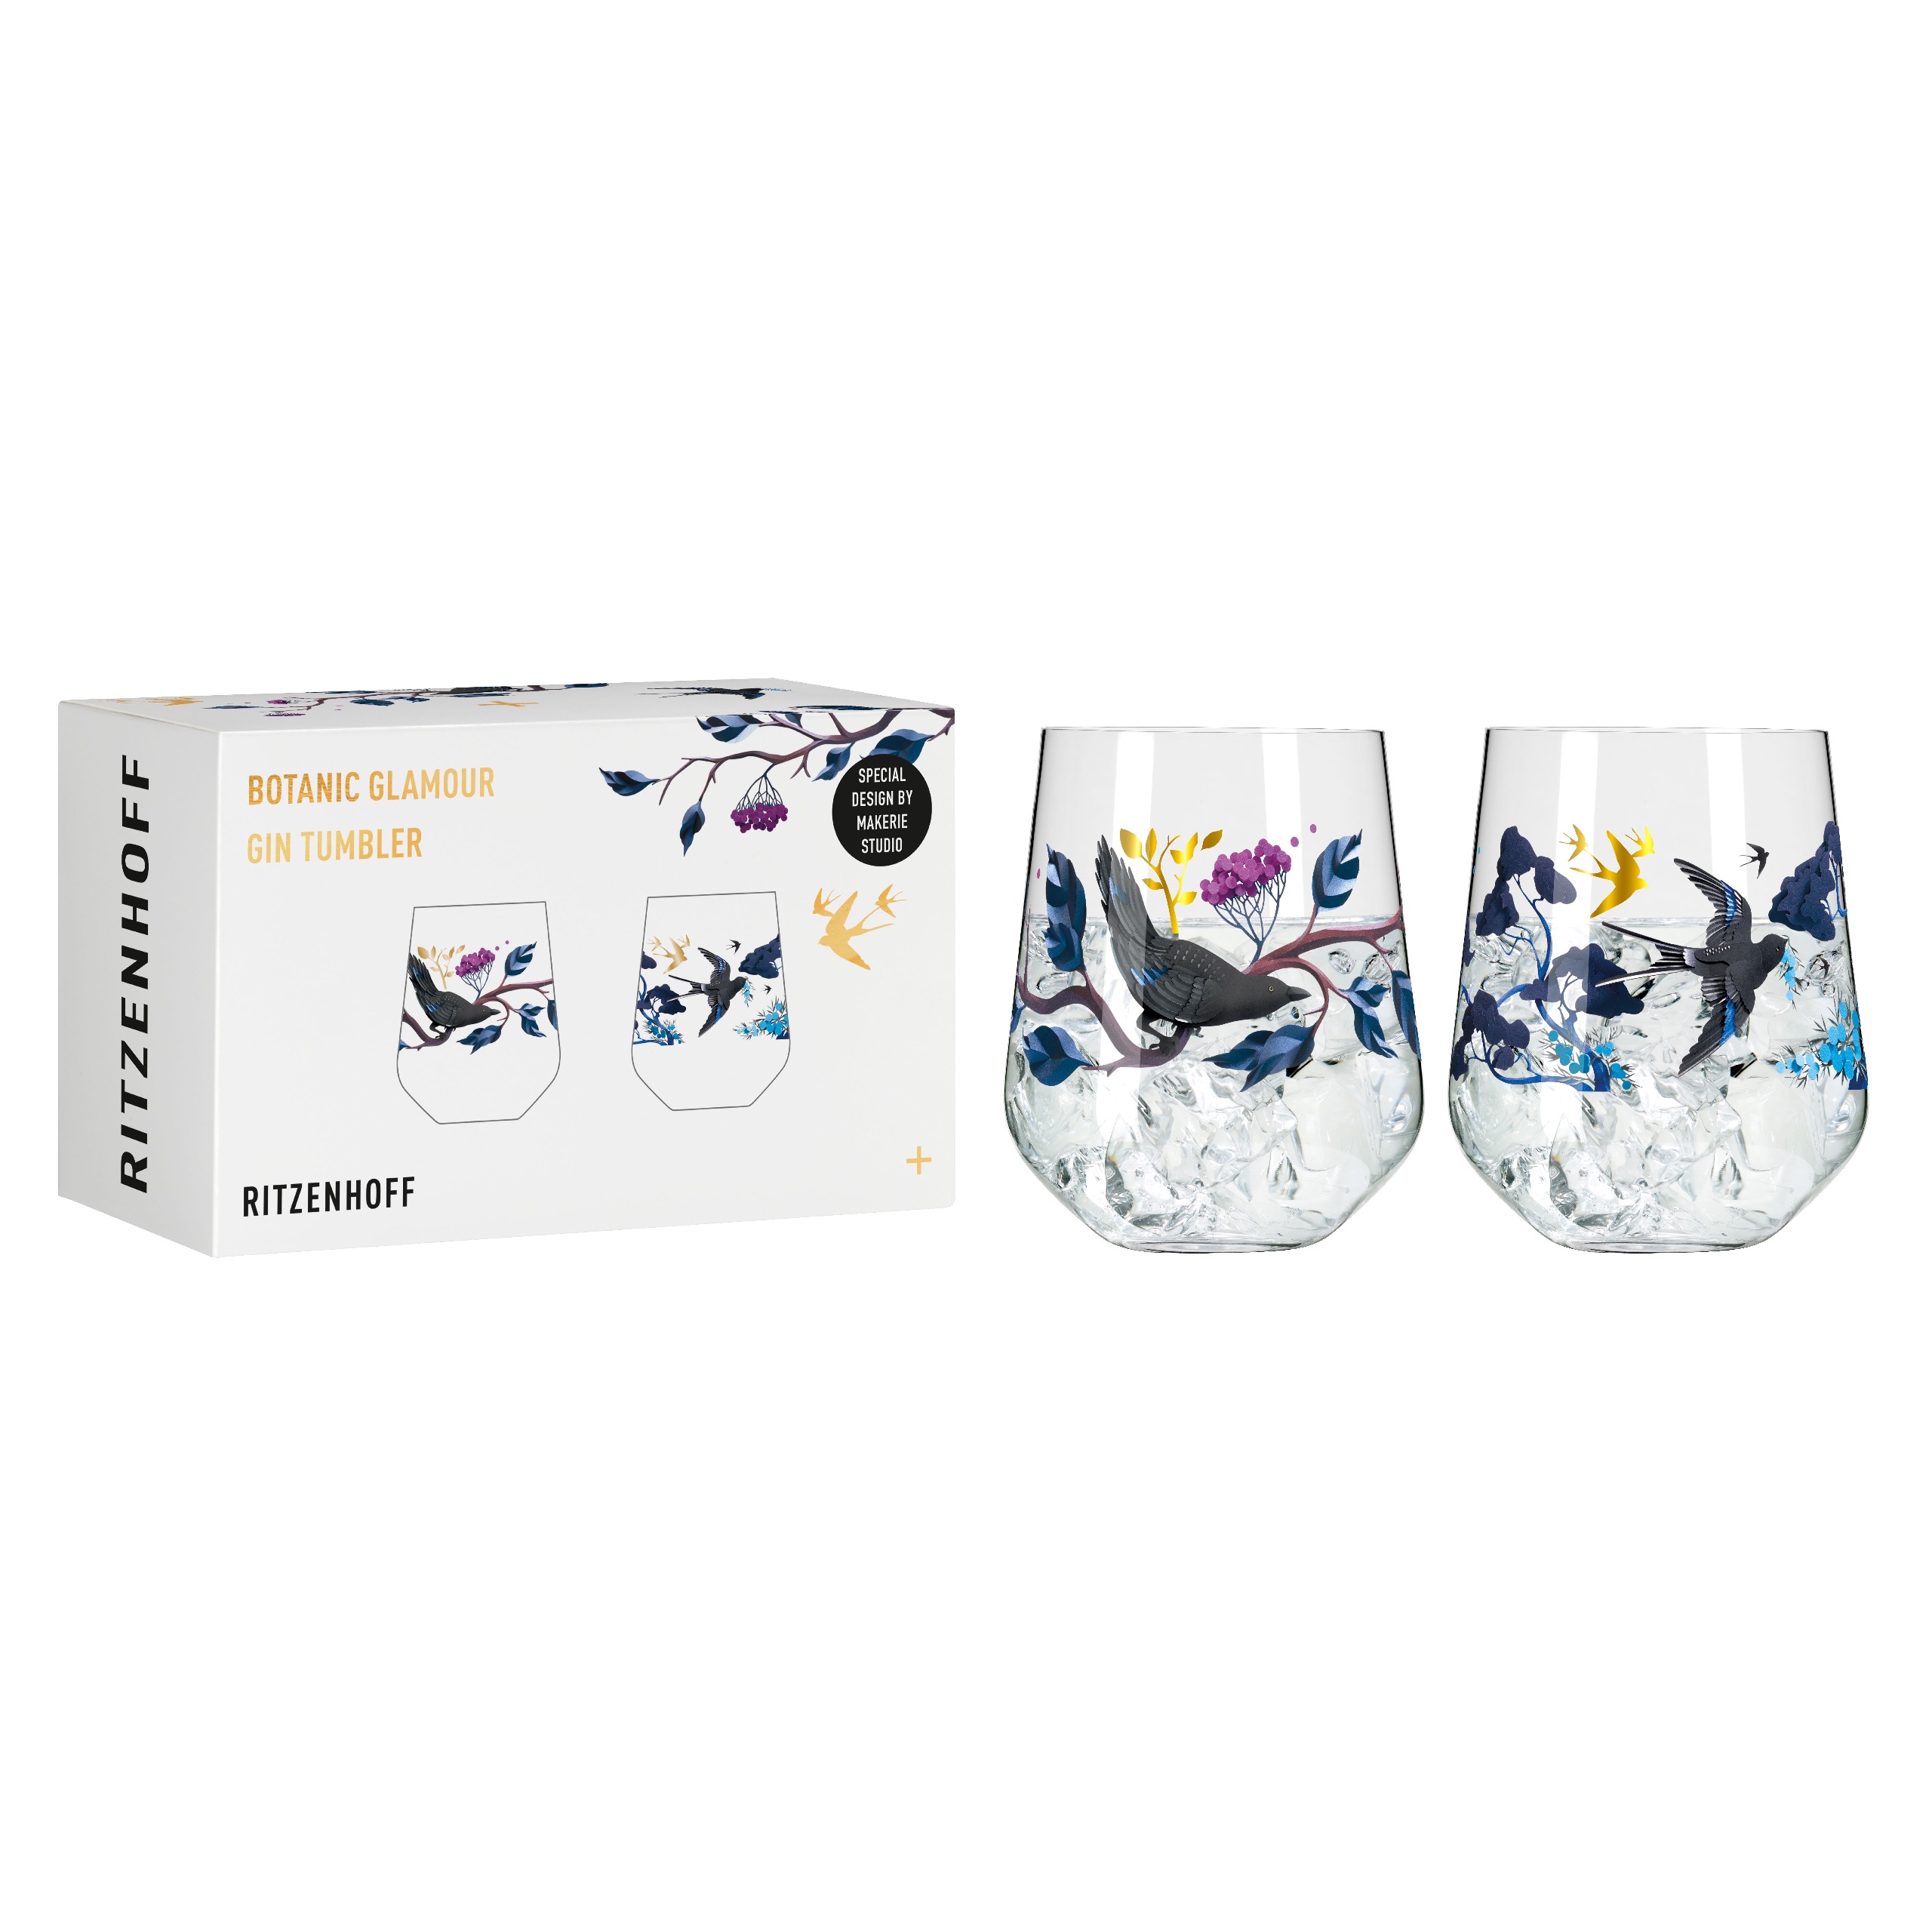 Botanic Glamour Gin Tumpler Glas 2er Set 710 ml Edles Longdrinkglas&#8208;Set,oyanne Horscroft 202 in einer exklusiven Geschenkverpackung